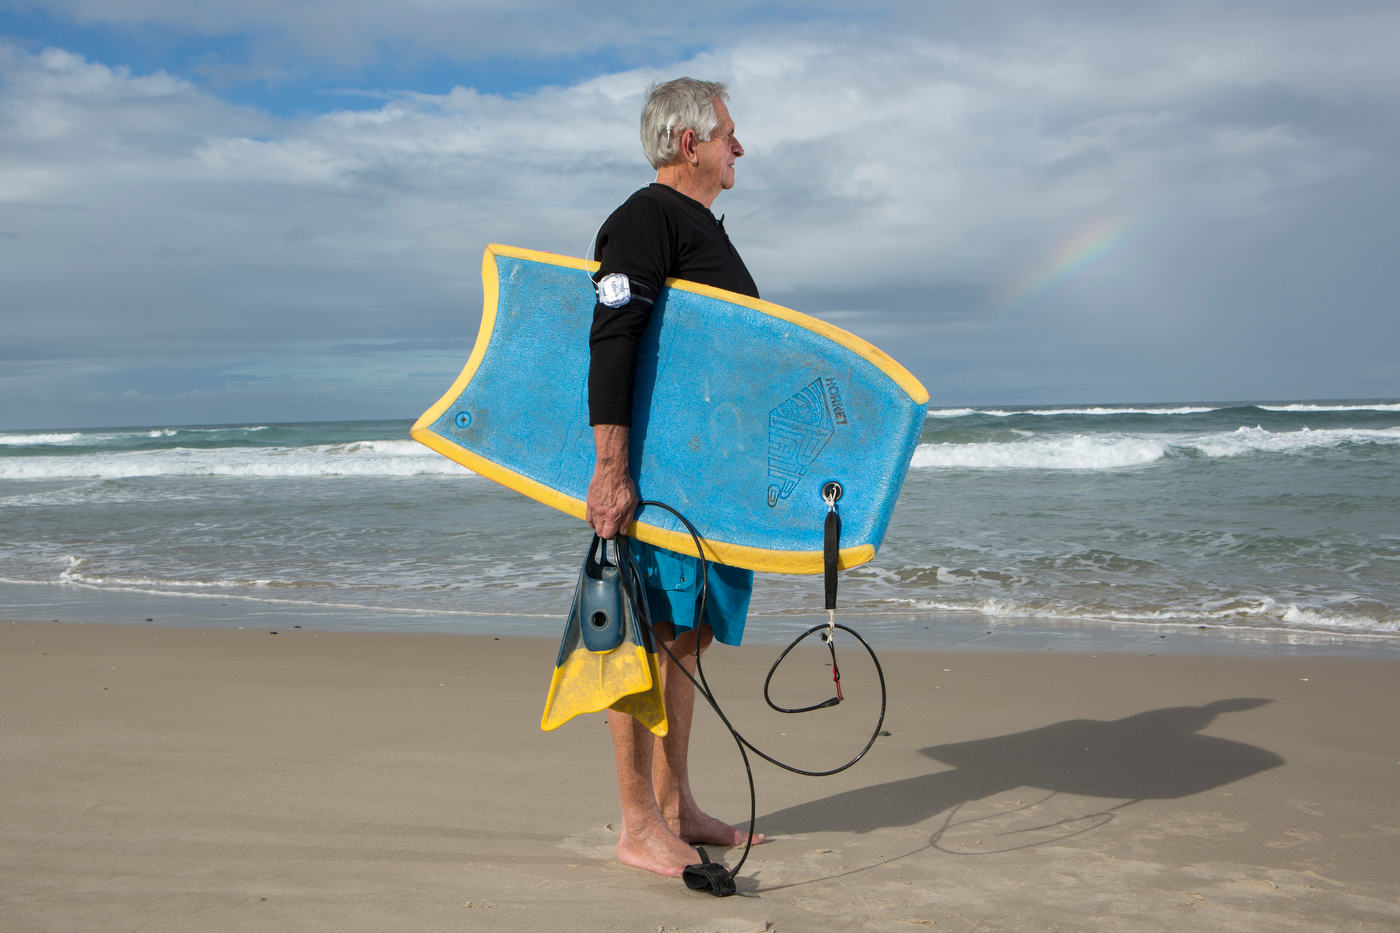 Steve, body surfer, Gold Coast, Australia.